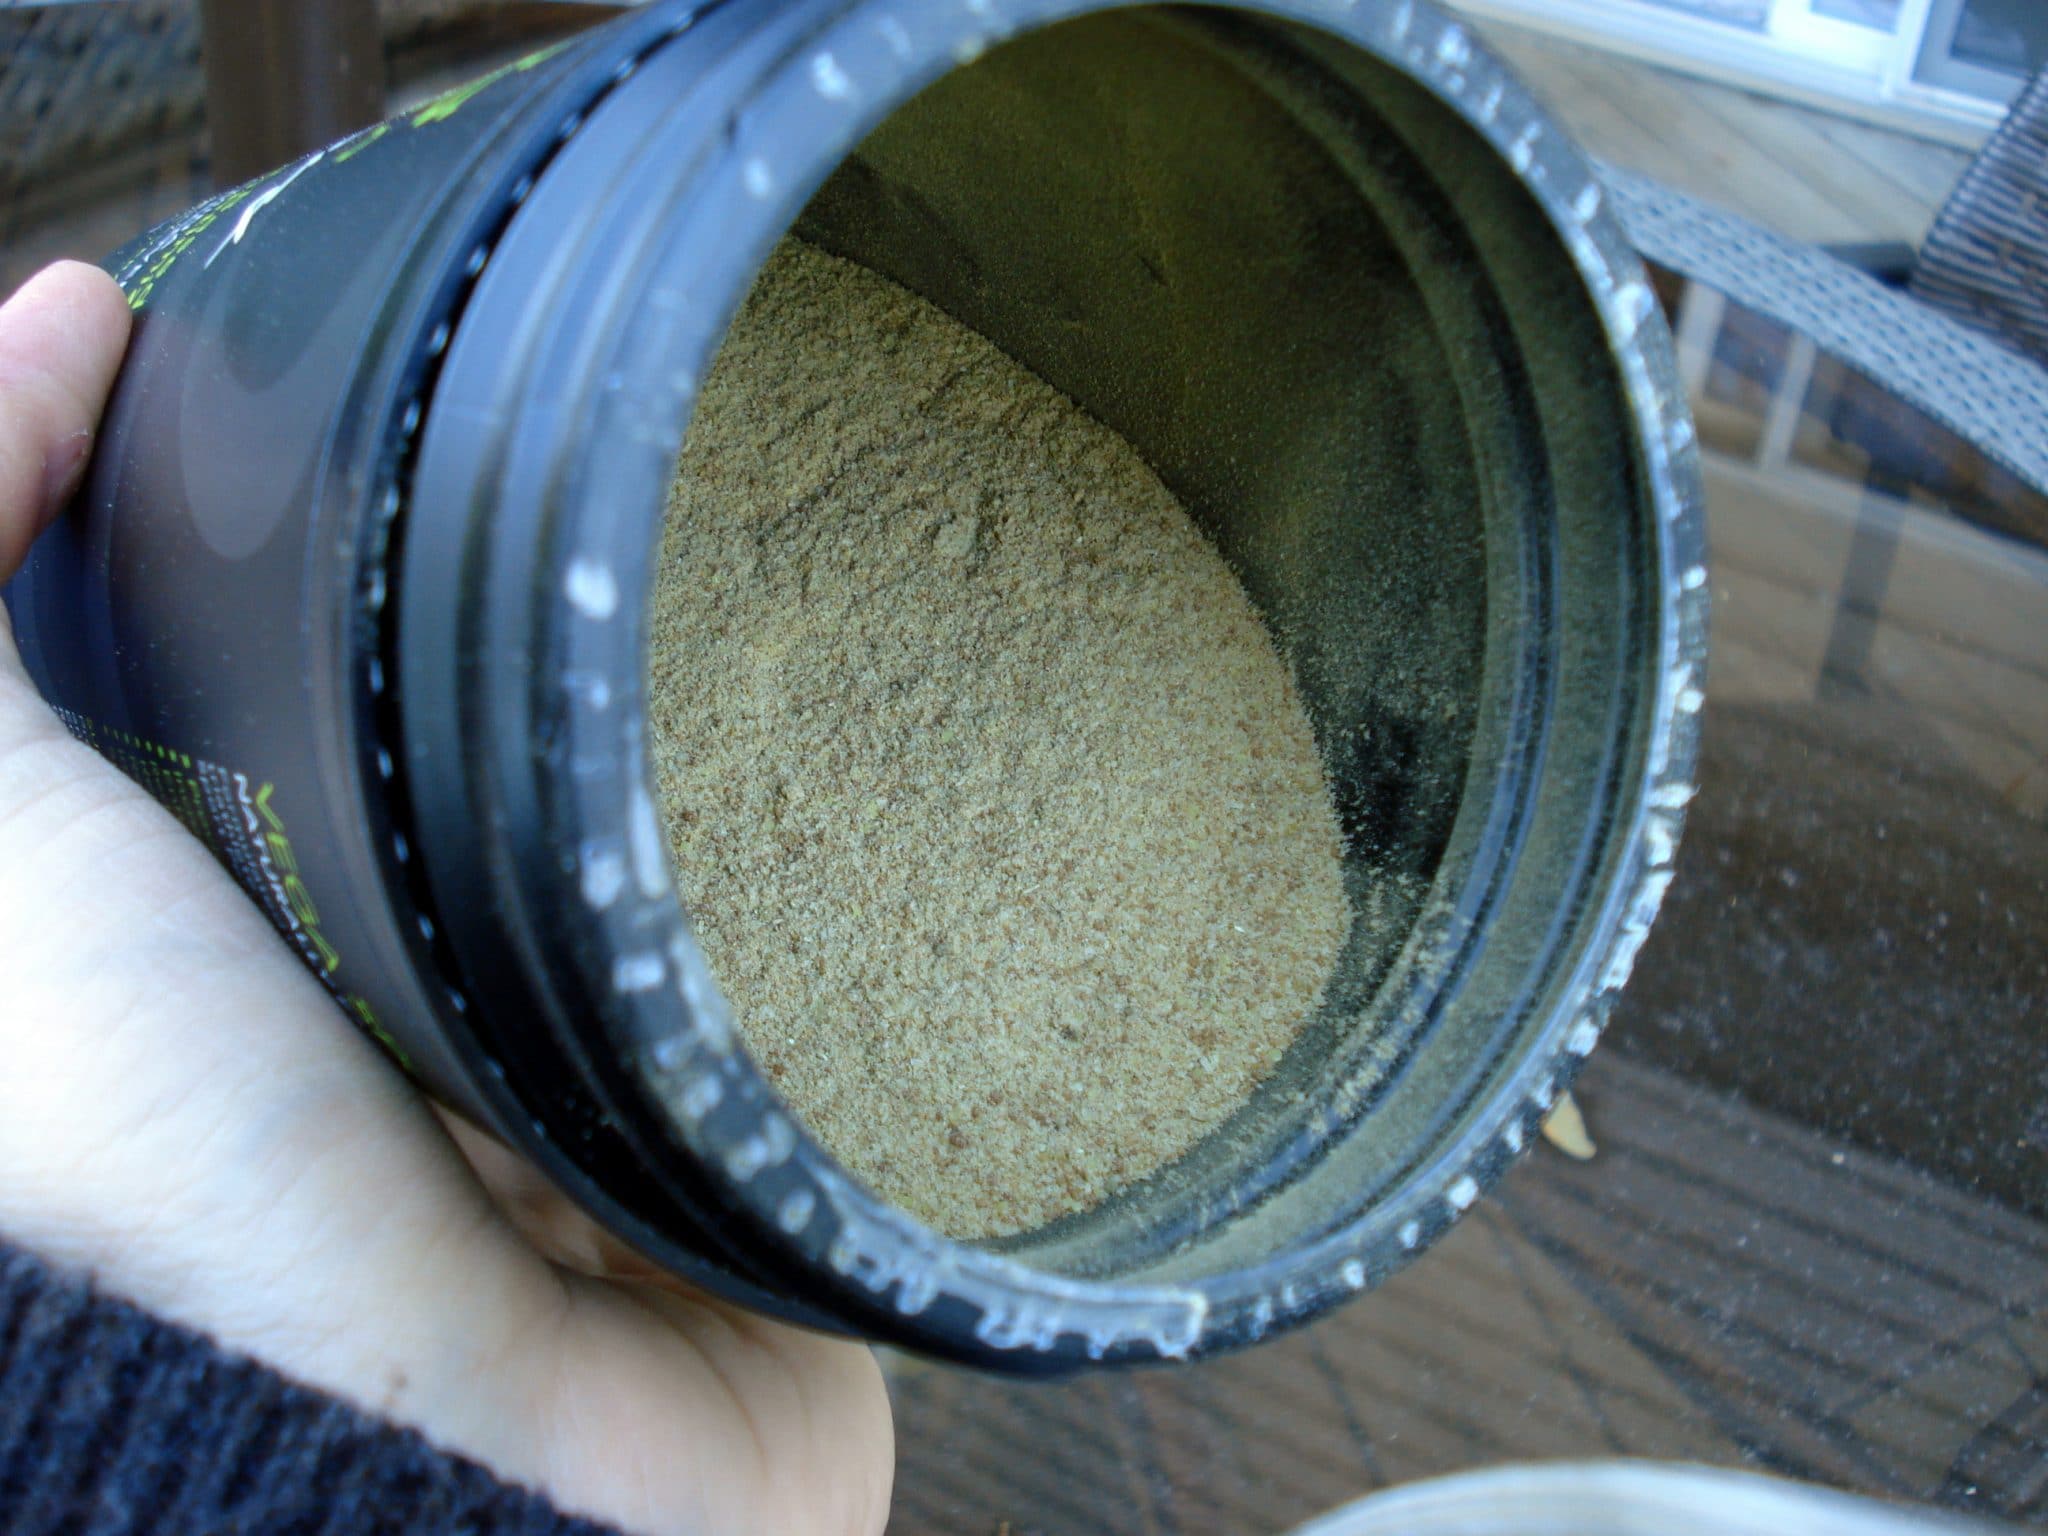 Inside the canister of Vega Sport Protein Powder